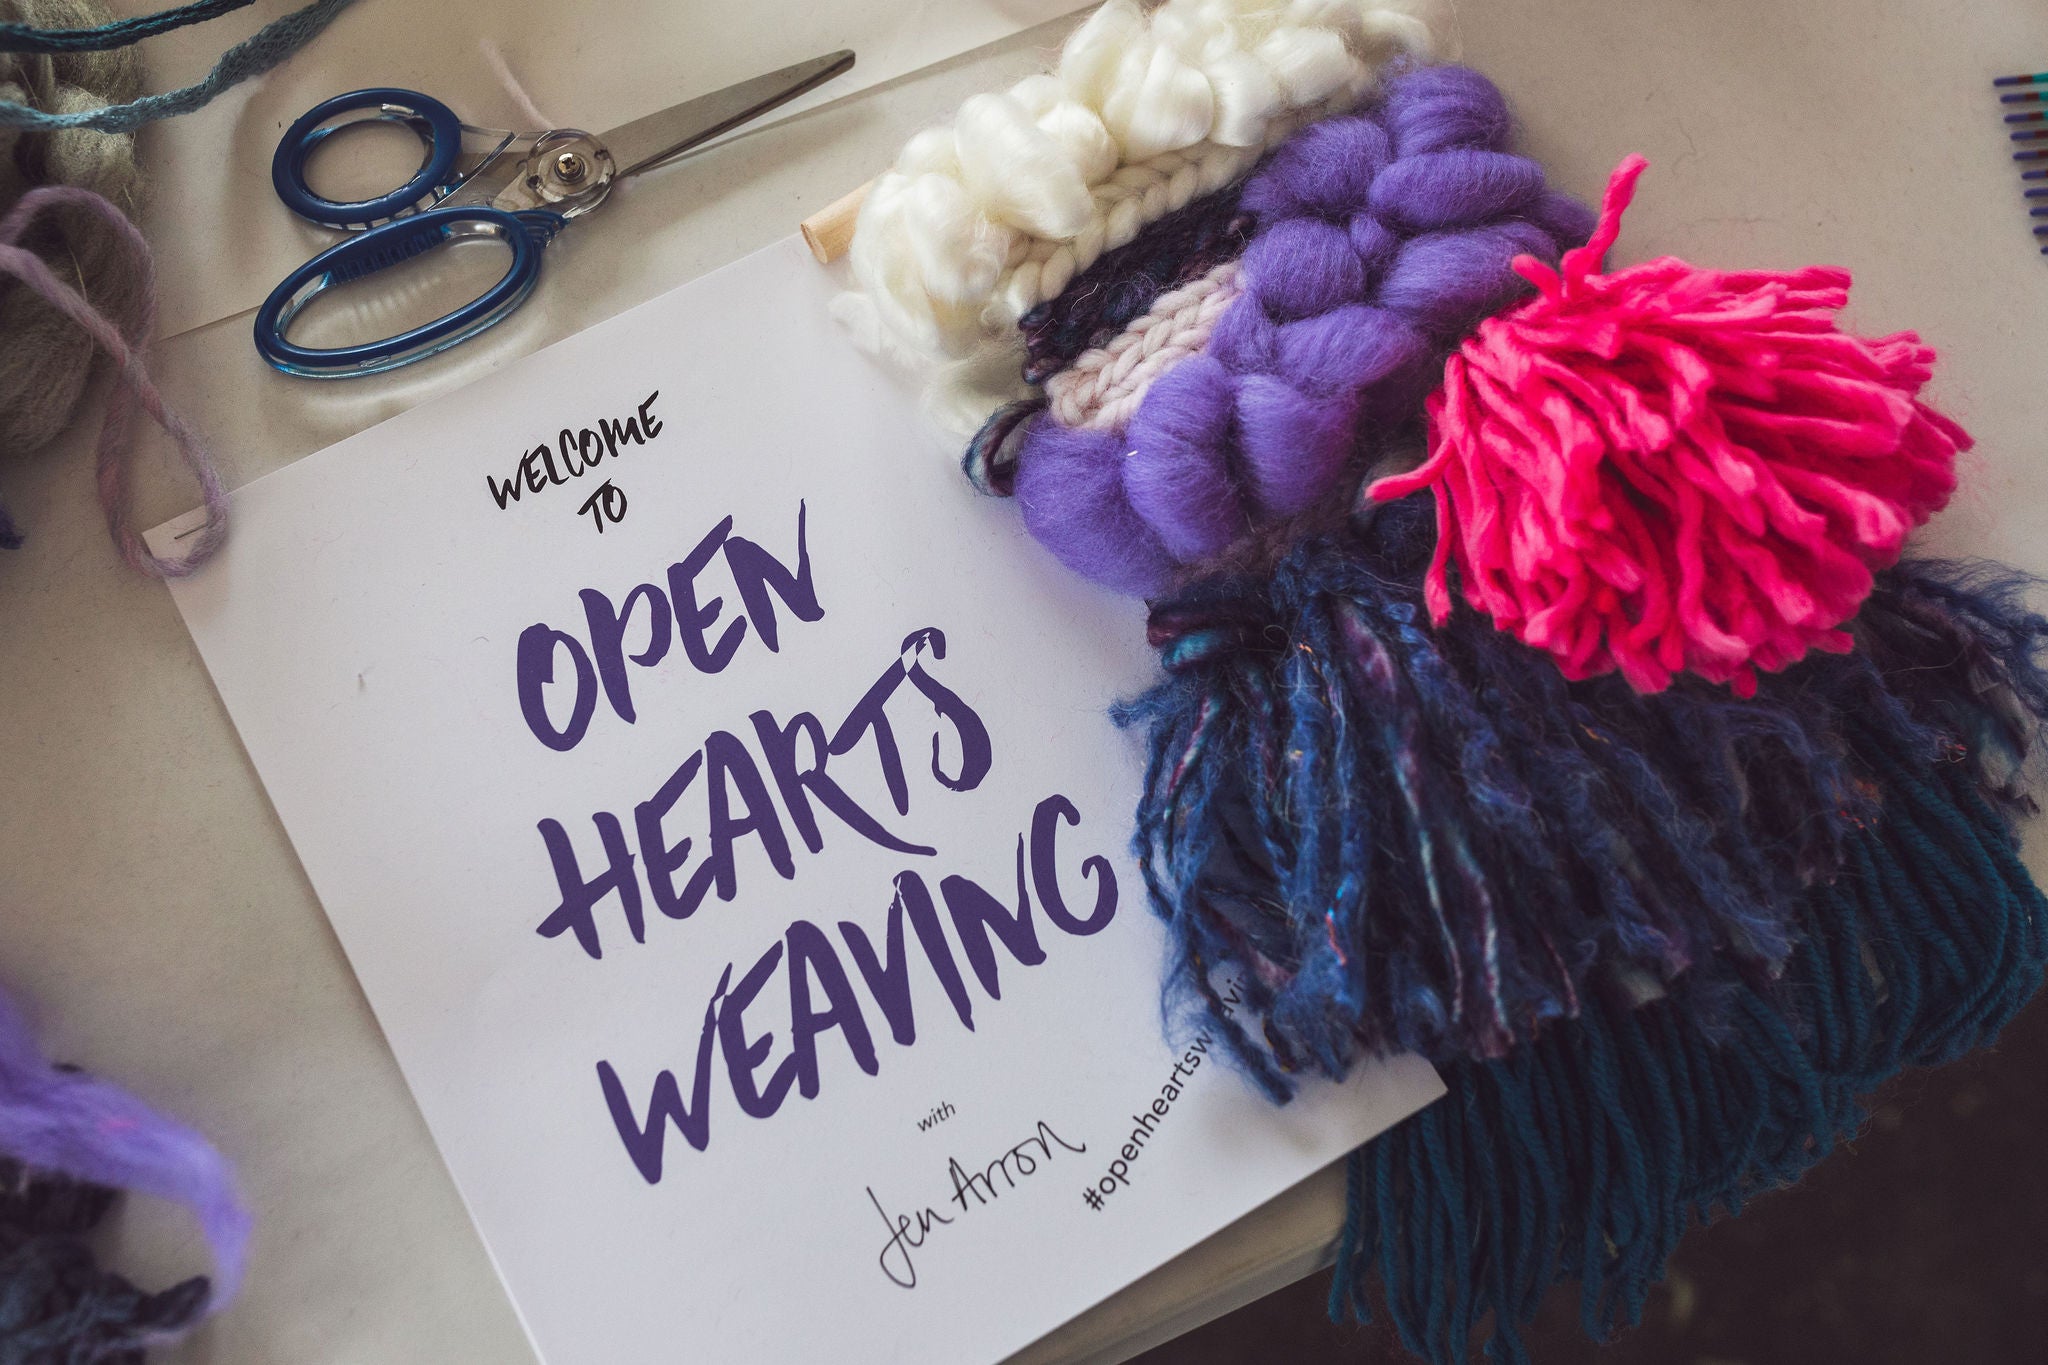 Open Hearts Weaving Workshop with @jenarron.studio